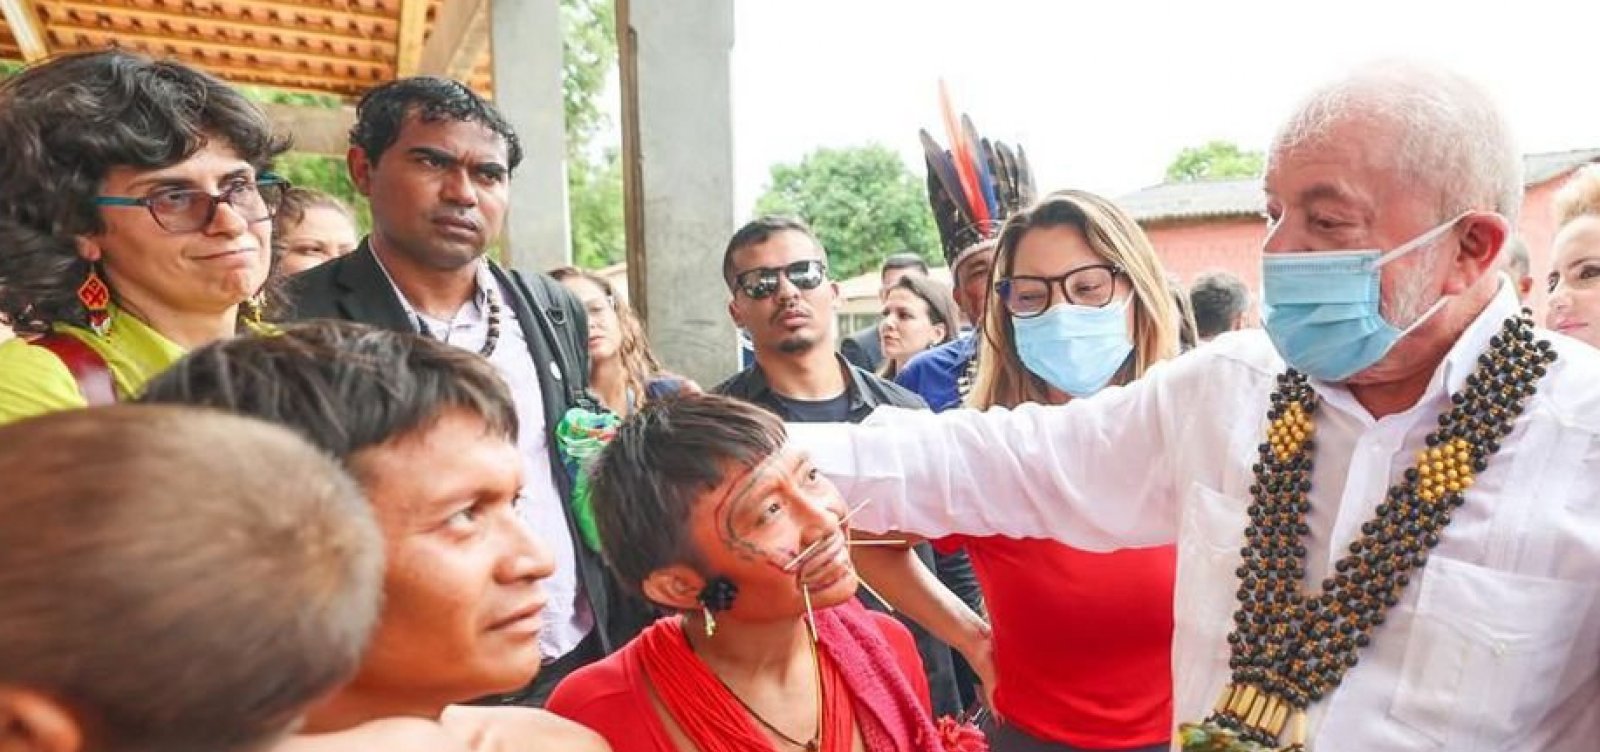 Lula exonera coordenadores de saúde indígena após tragédia Yanomami